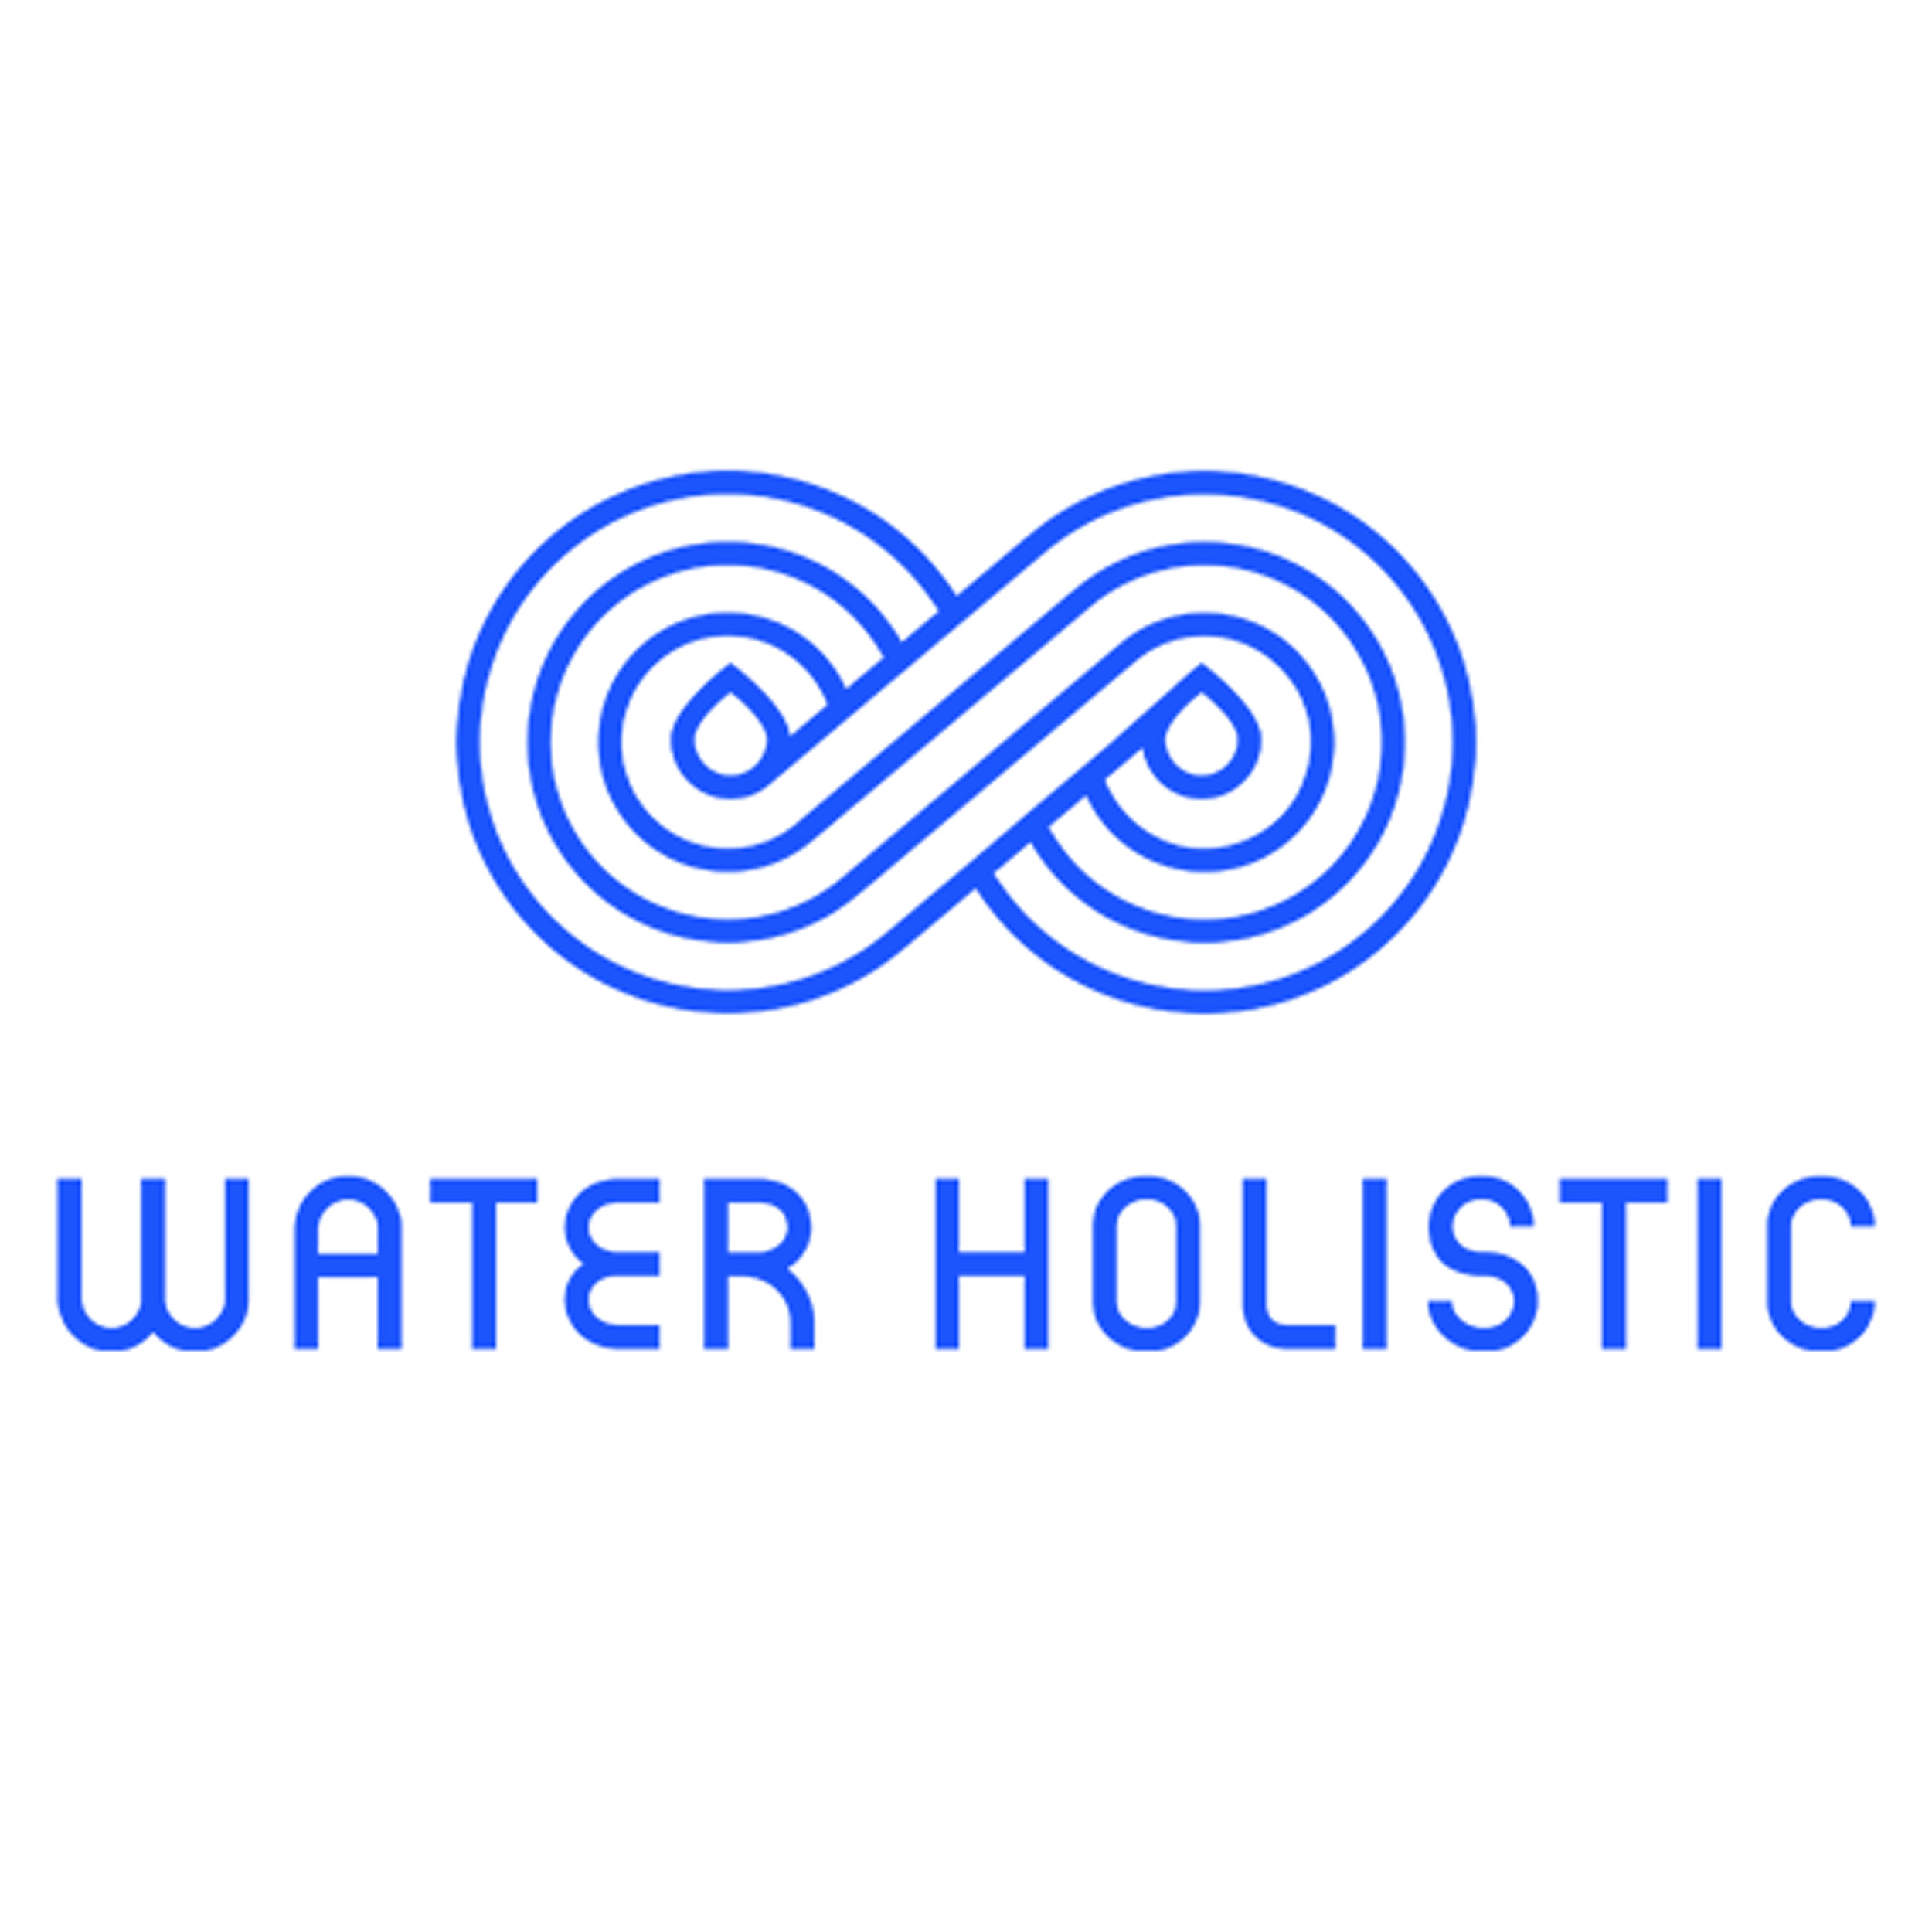 waterholistic.com